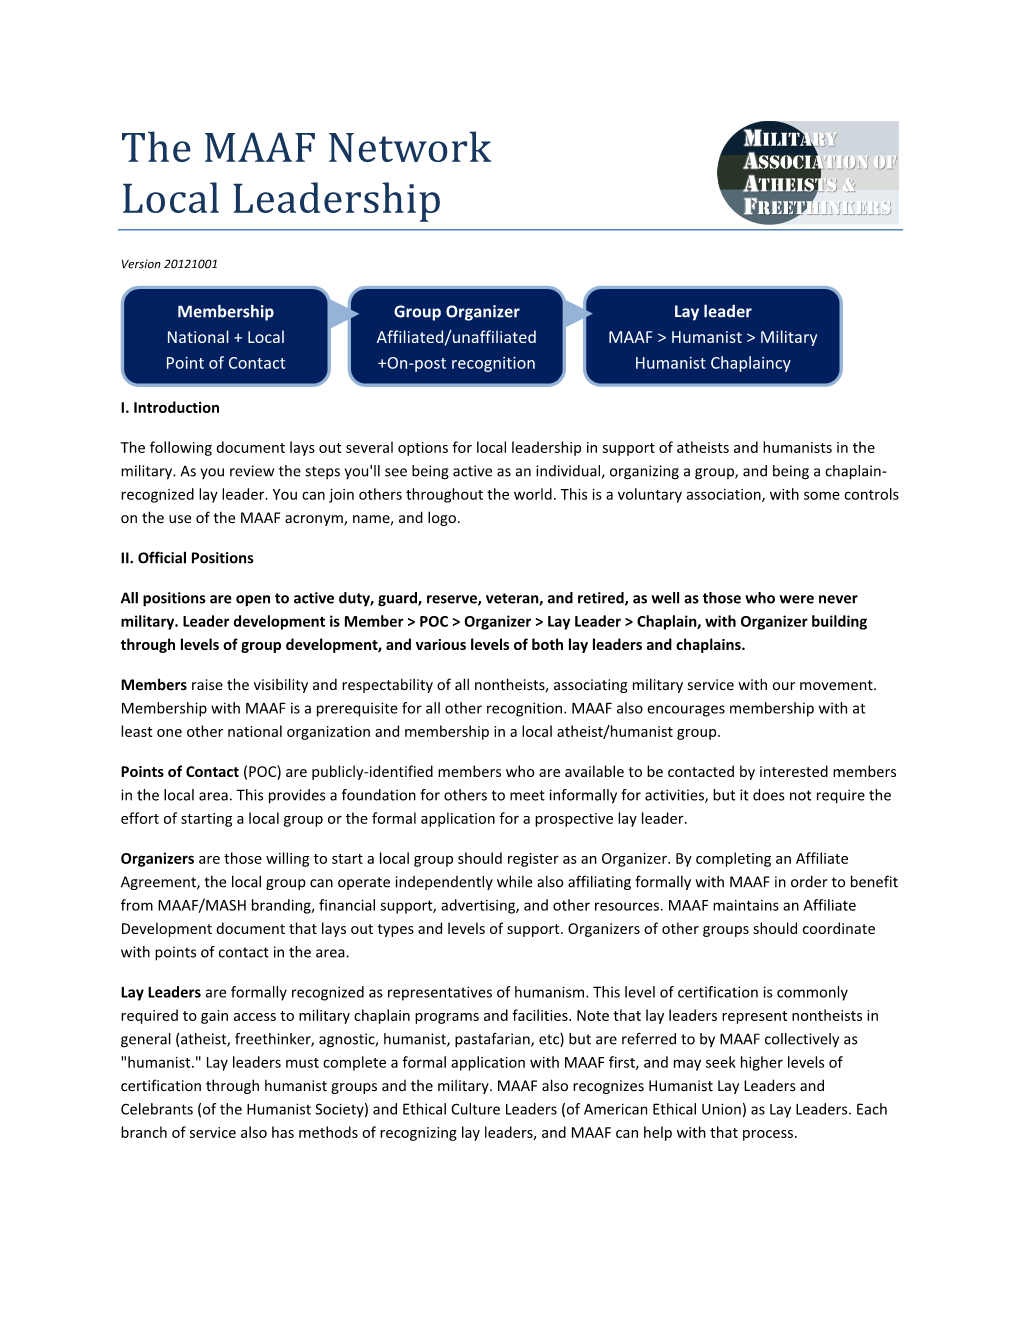 Local Leadership